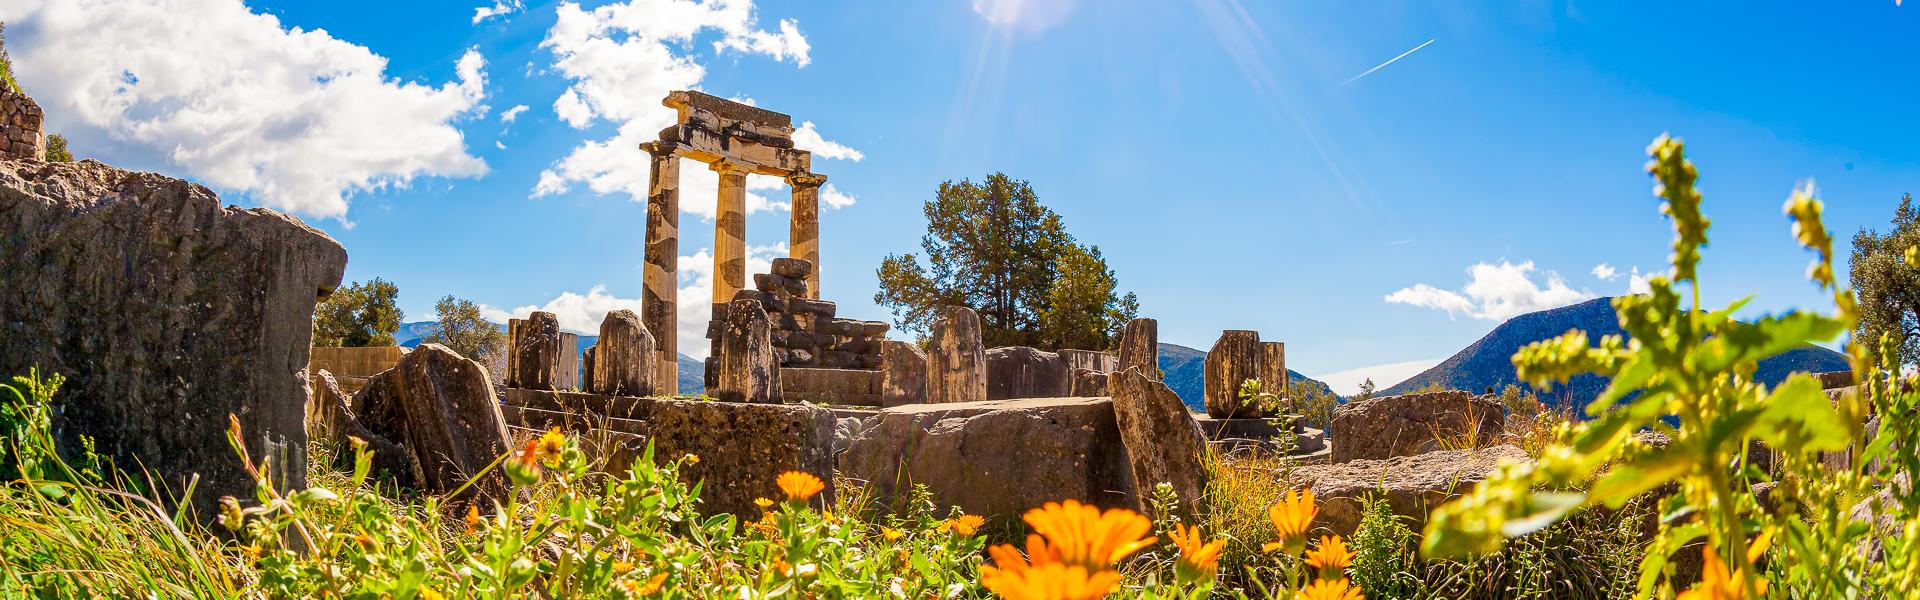 Tempelruine in Delphi |  extravagantni, iStockphoto.com / Chamleon